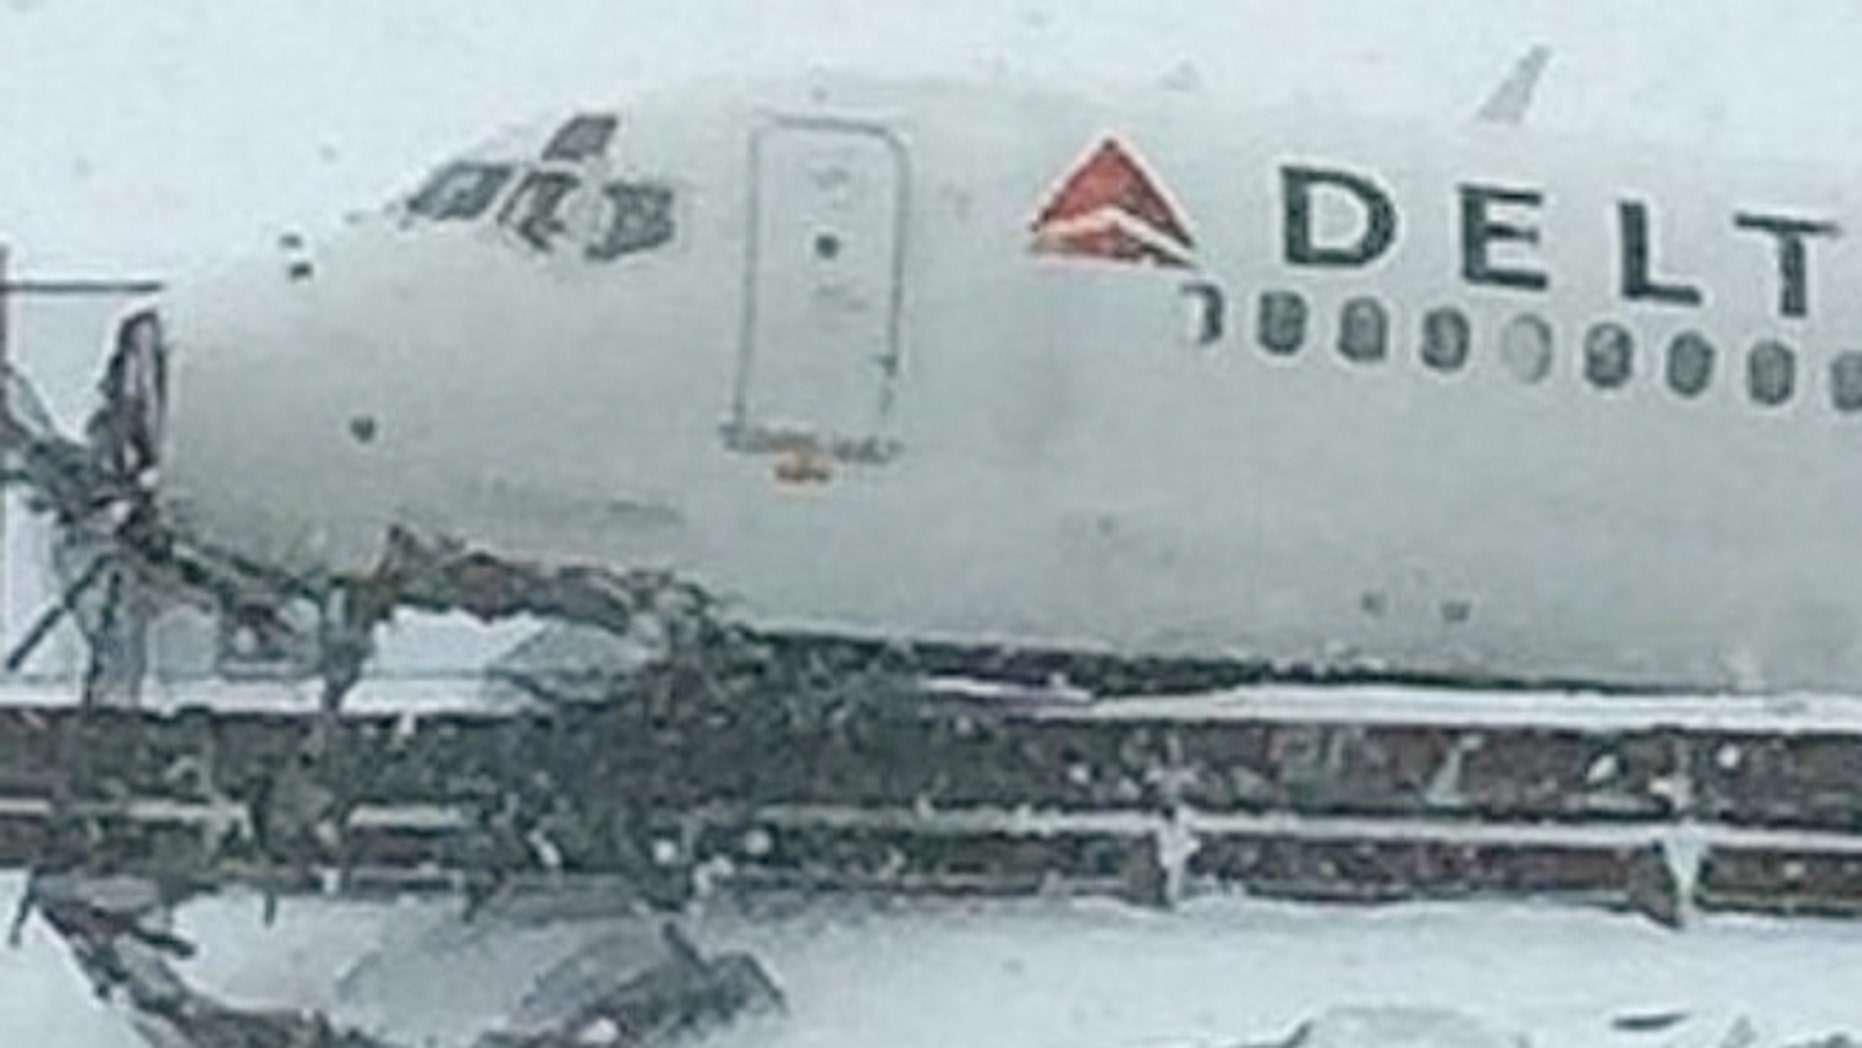 Social media floods with images of Delta flight that skidded off LGA